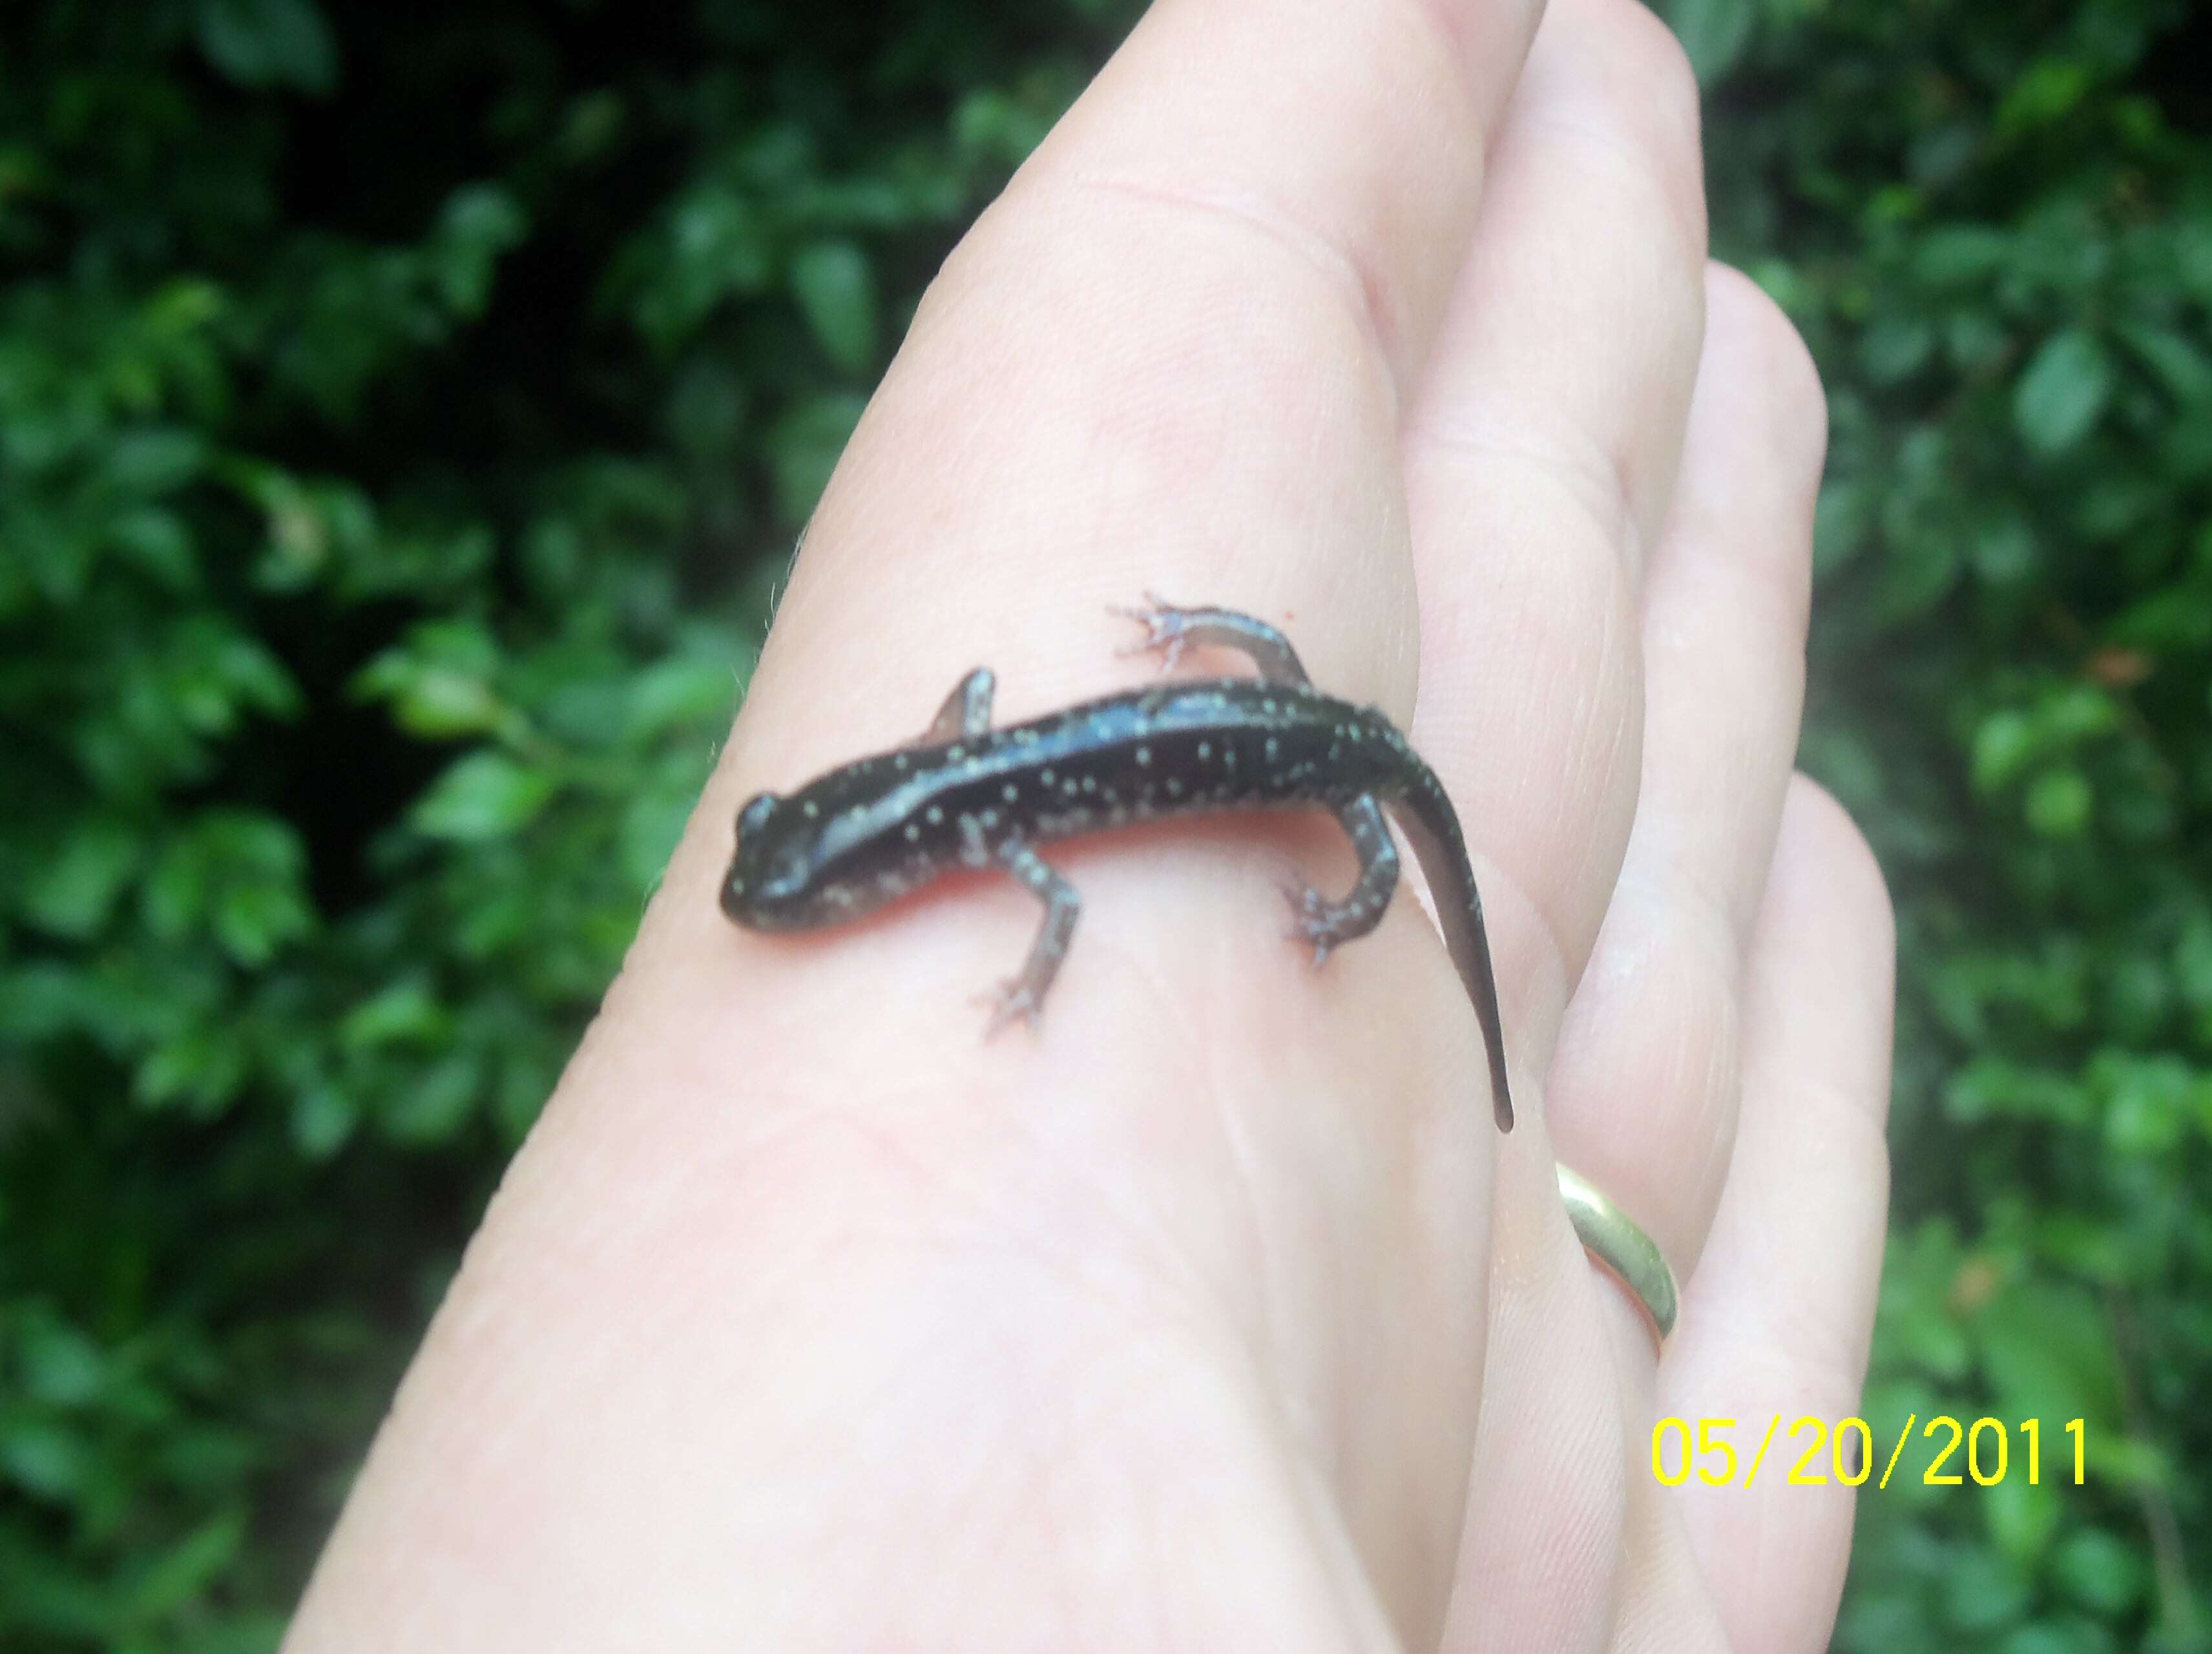 Image of Cumberland Plateau Salamander